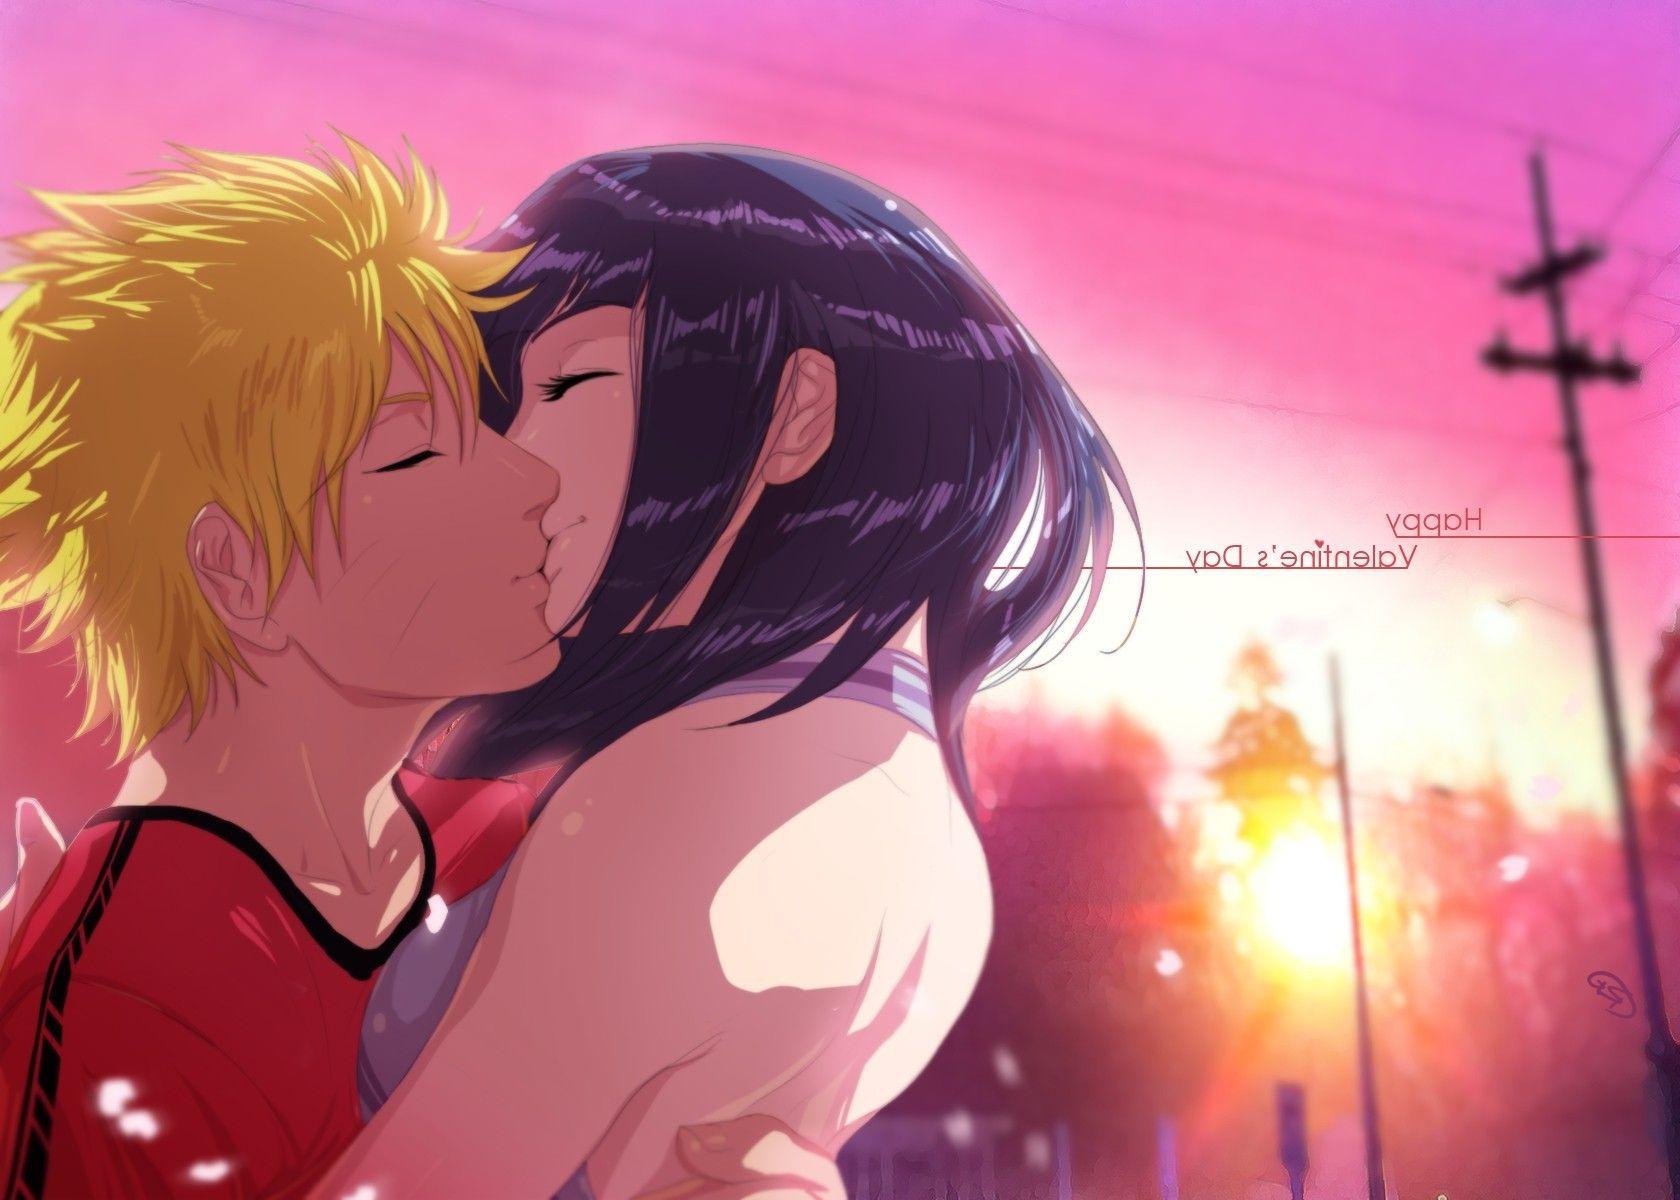 Anime series naruto couple short hair love kiss wallpaper, 1573x2200, 666214